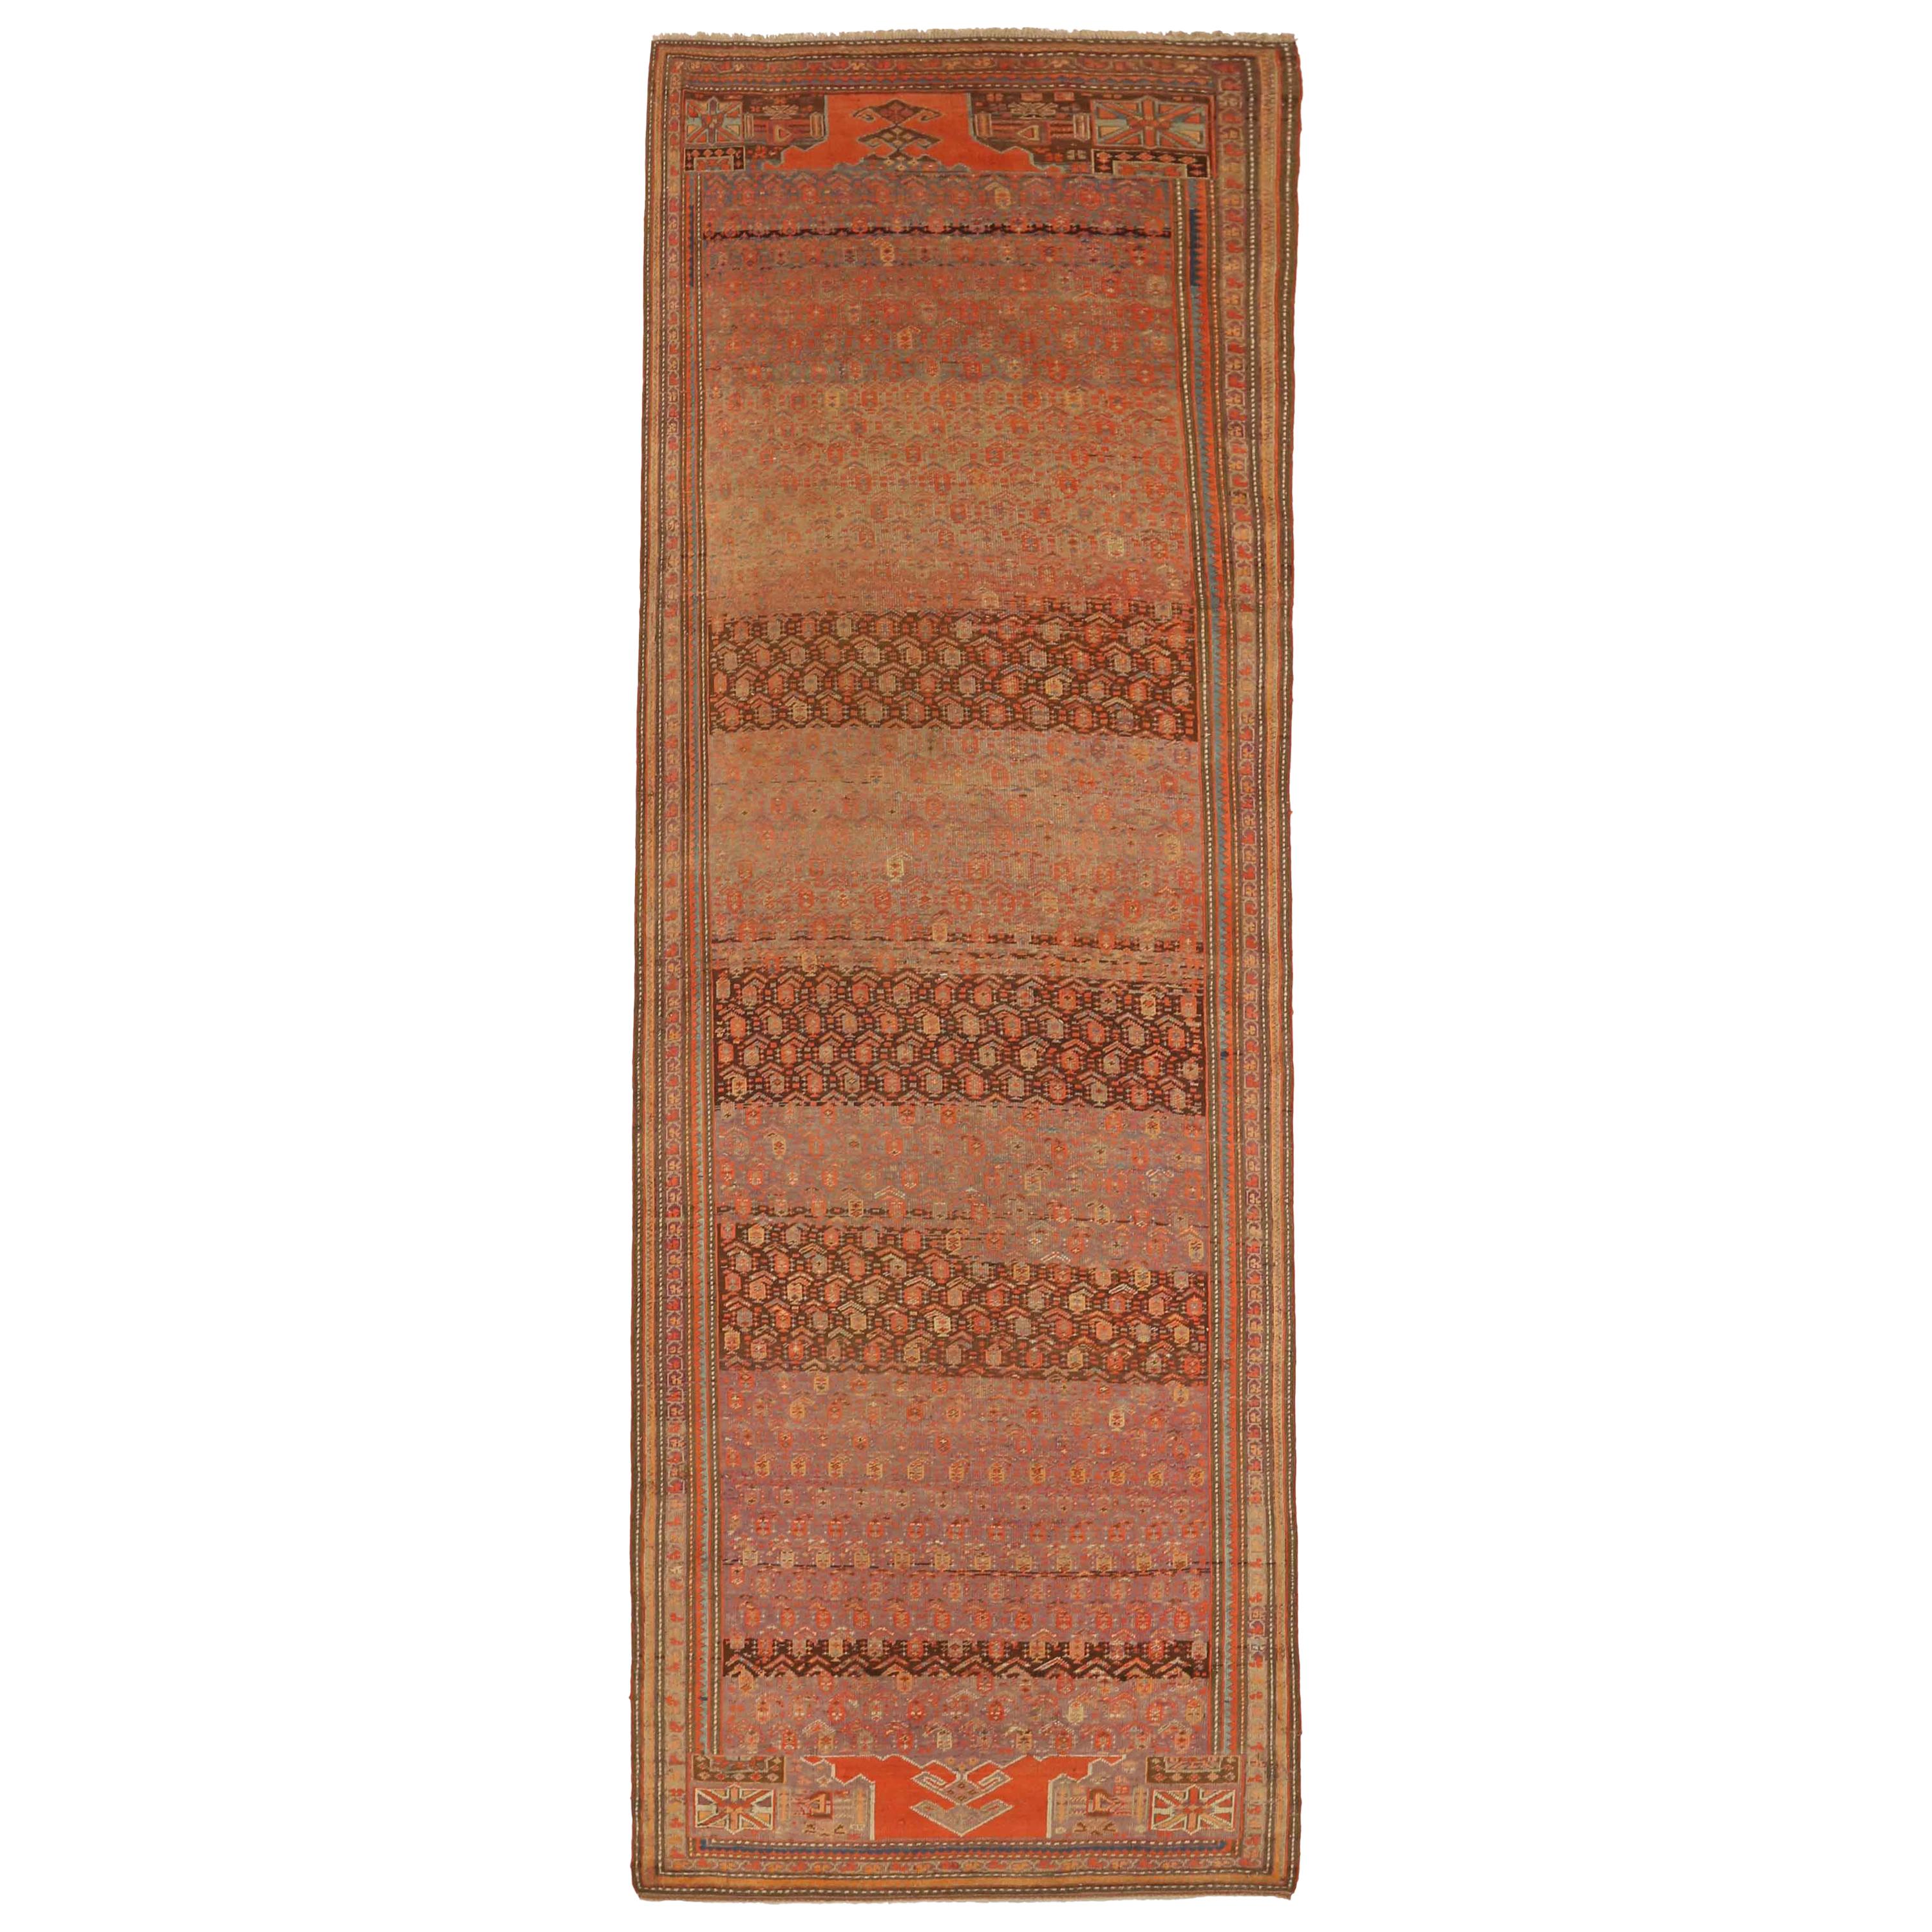 Antique Persian Rug Meshkin Design with Stylish Fading Patterns, circa 1920s